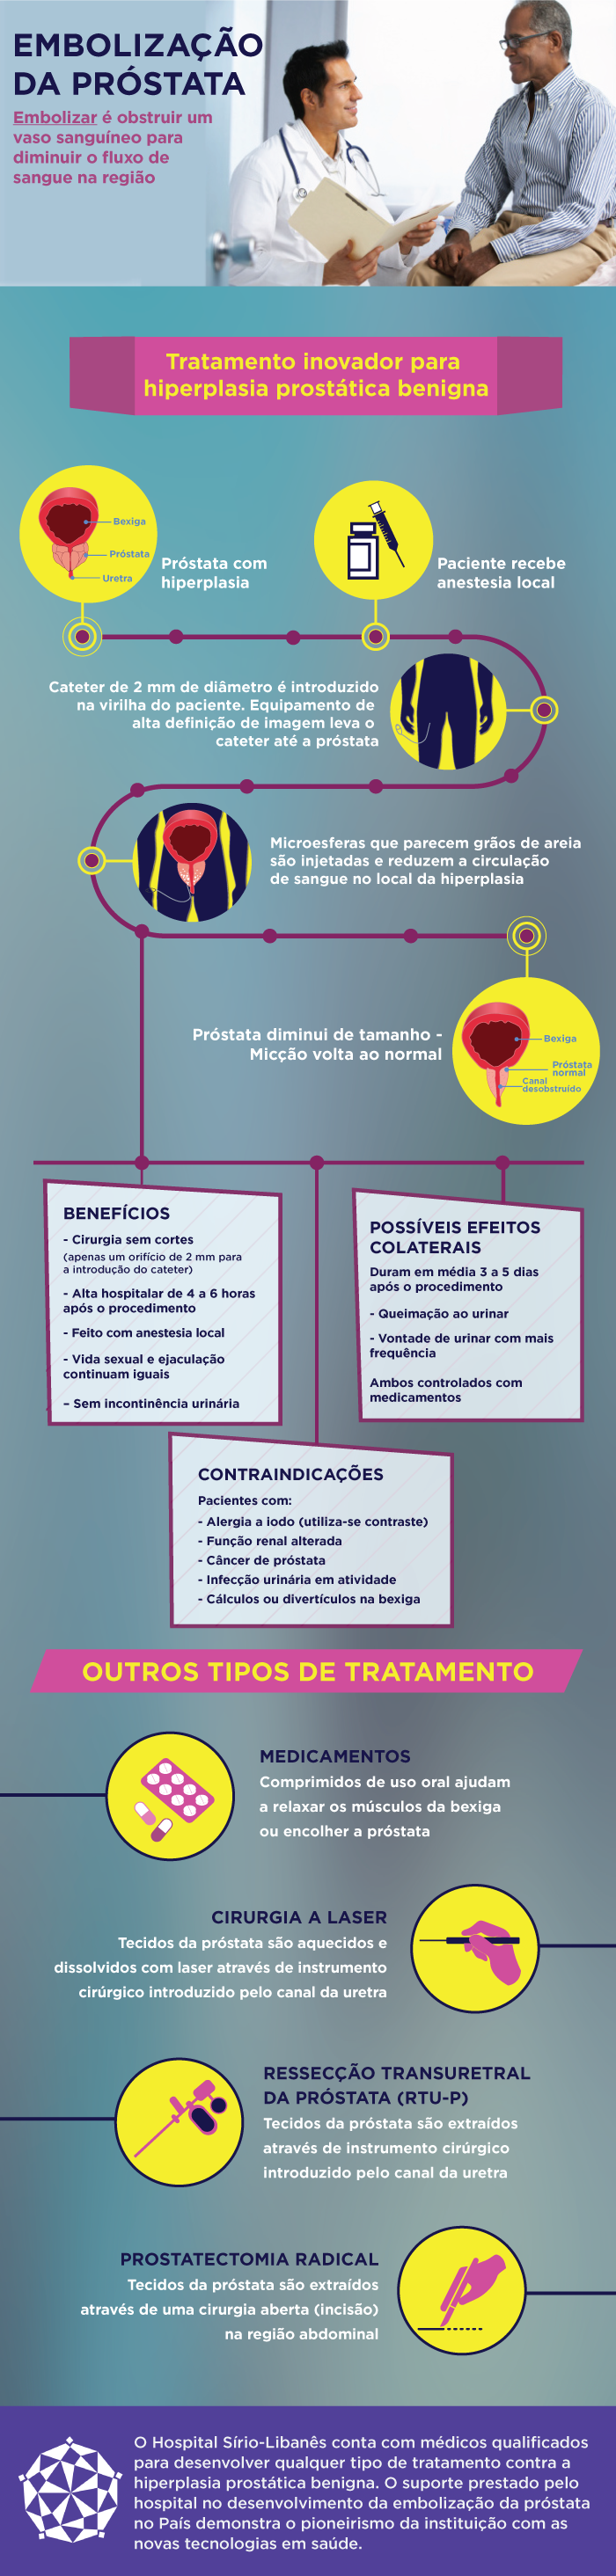 infografico-hiperplasia-prostatica-benigna.png